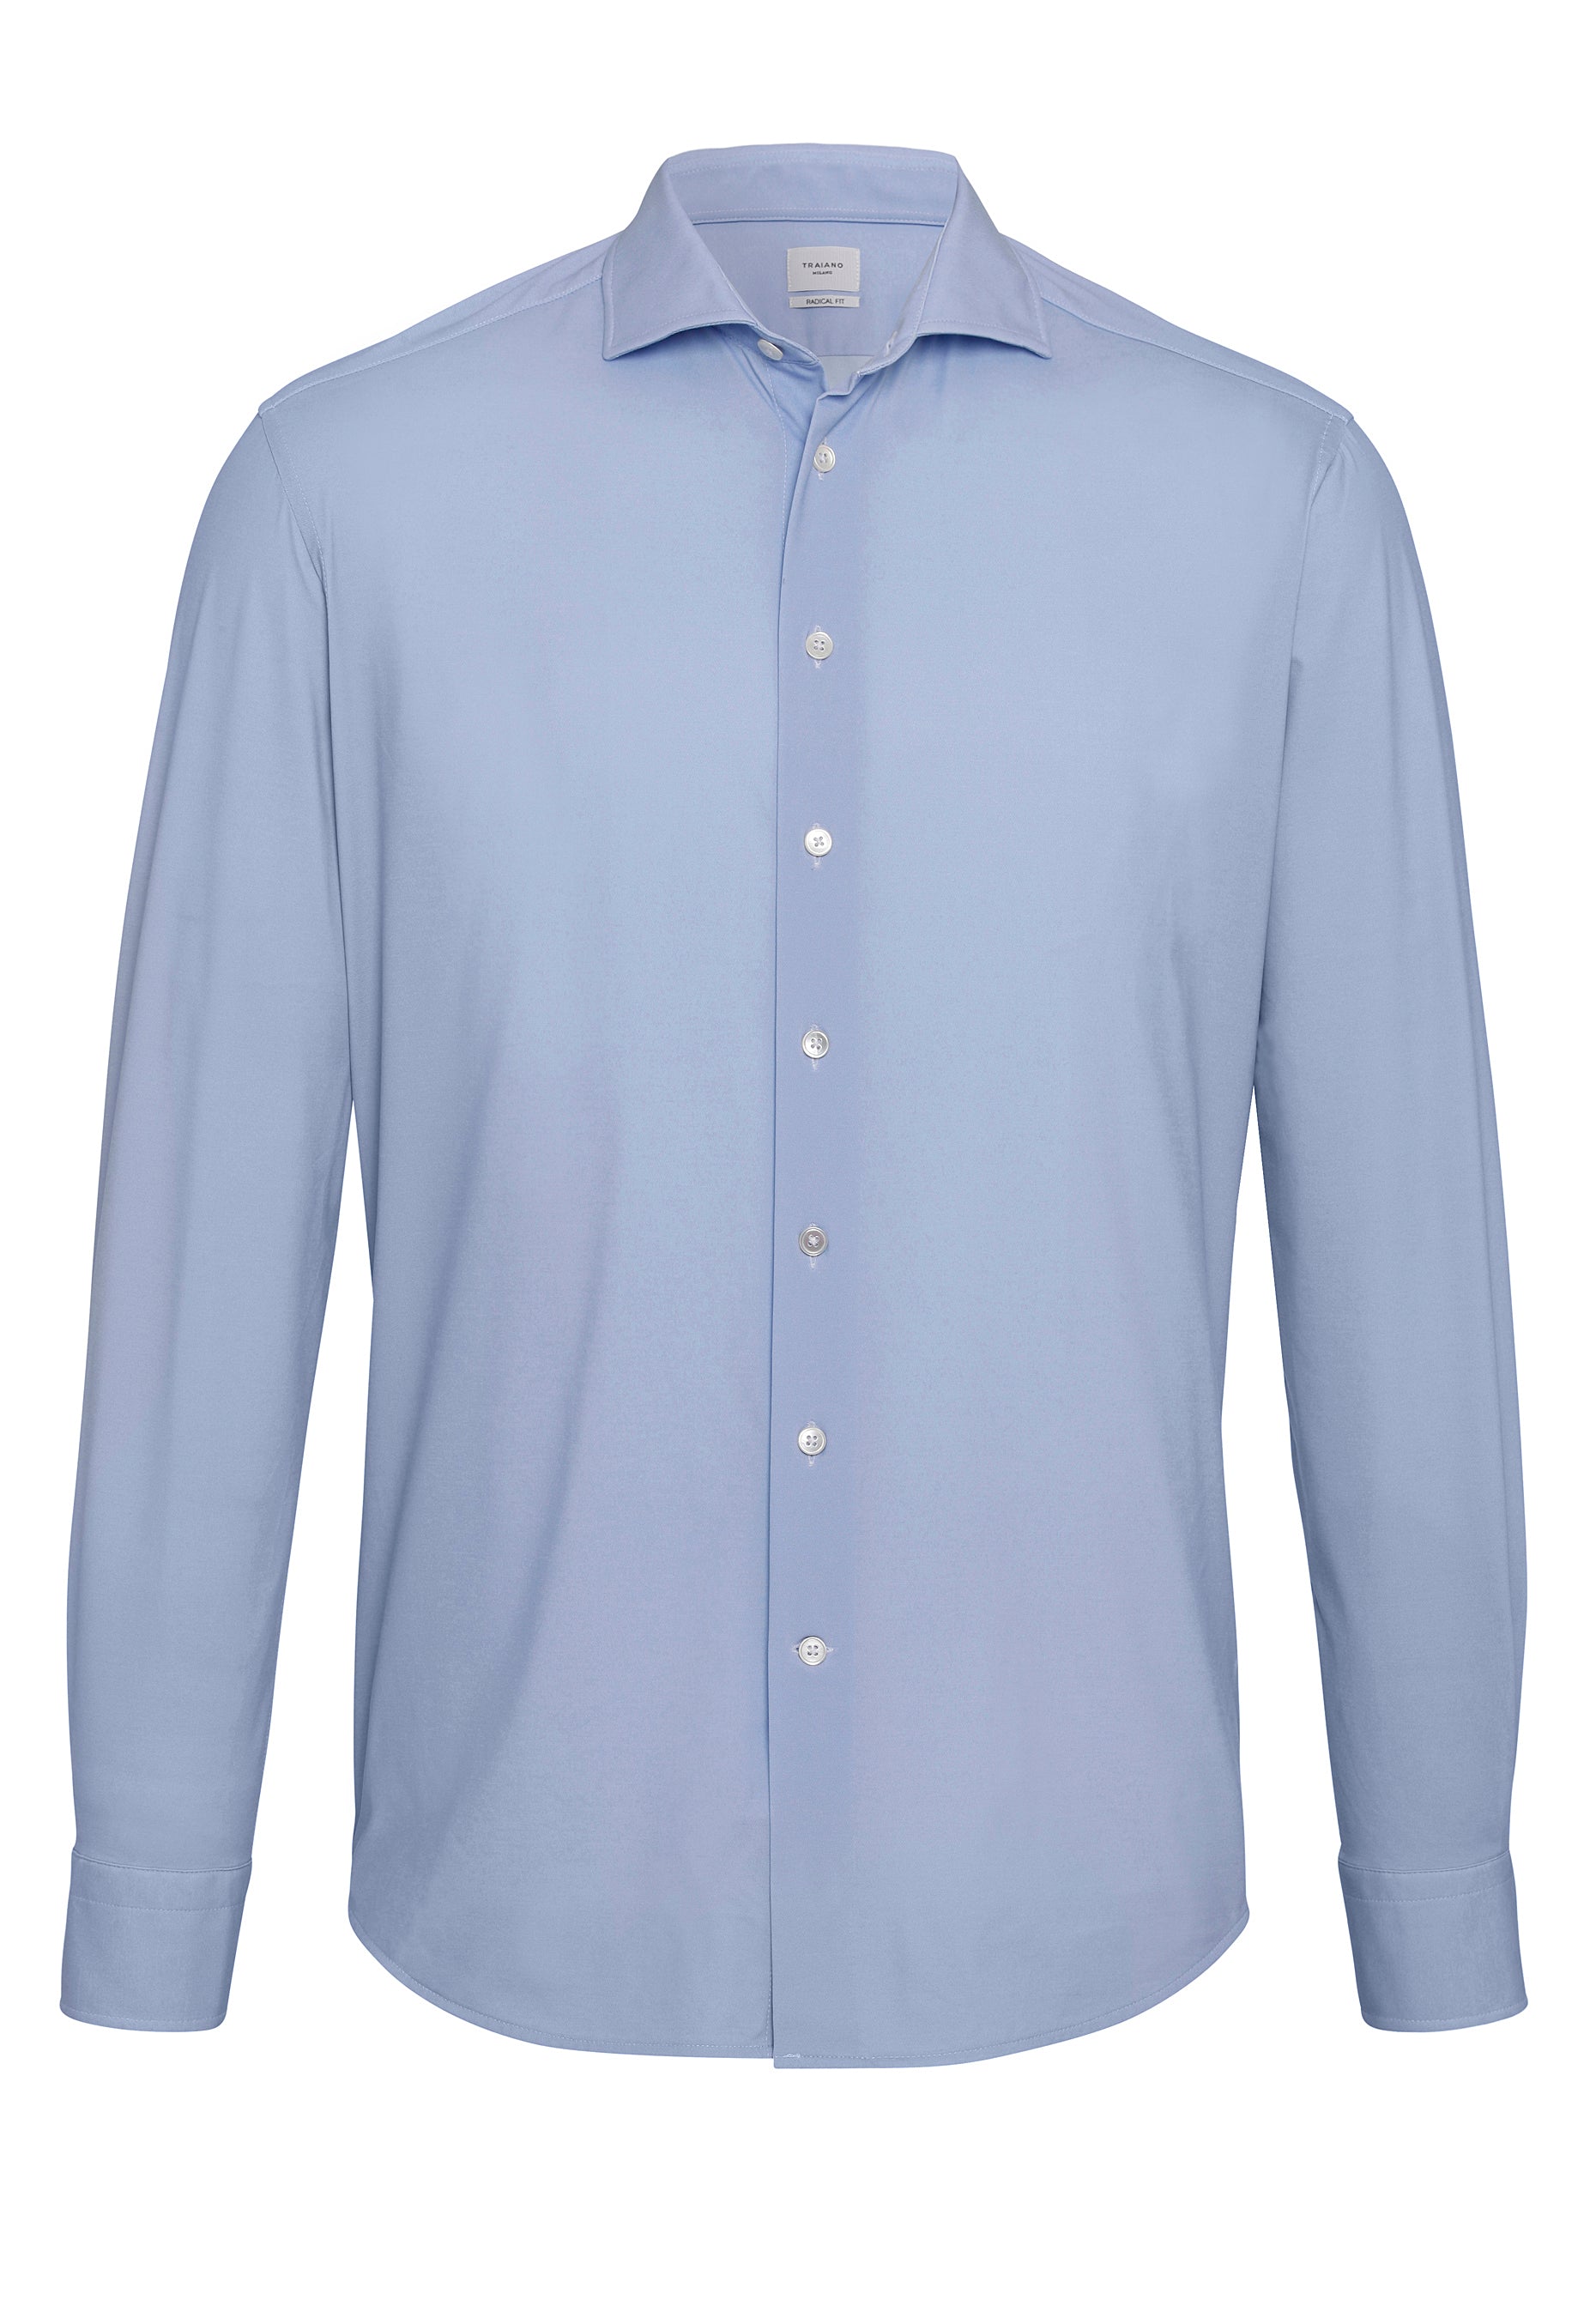 T1010-311 Traiano Rossini Radical Fit Shirt 110 uni blue